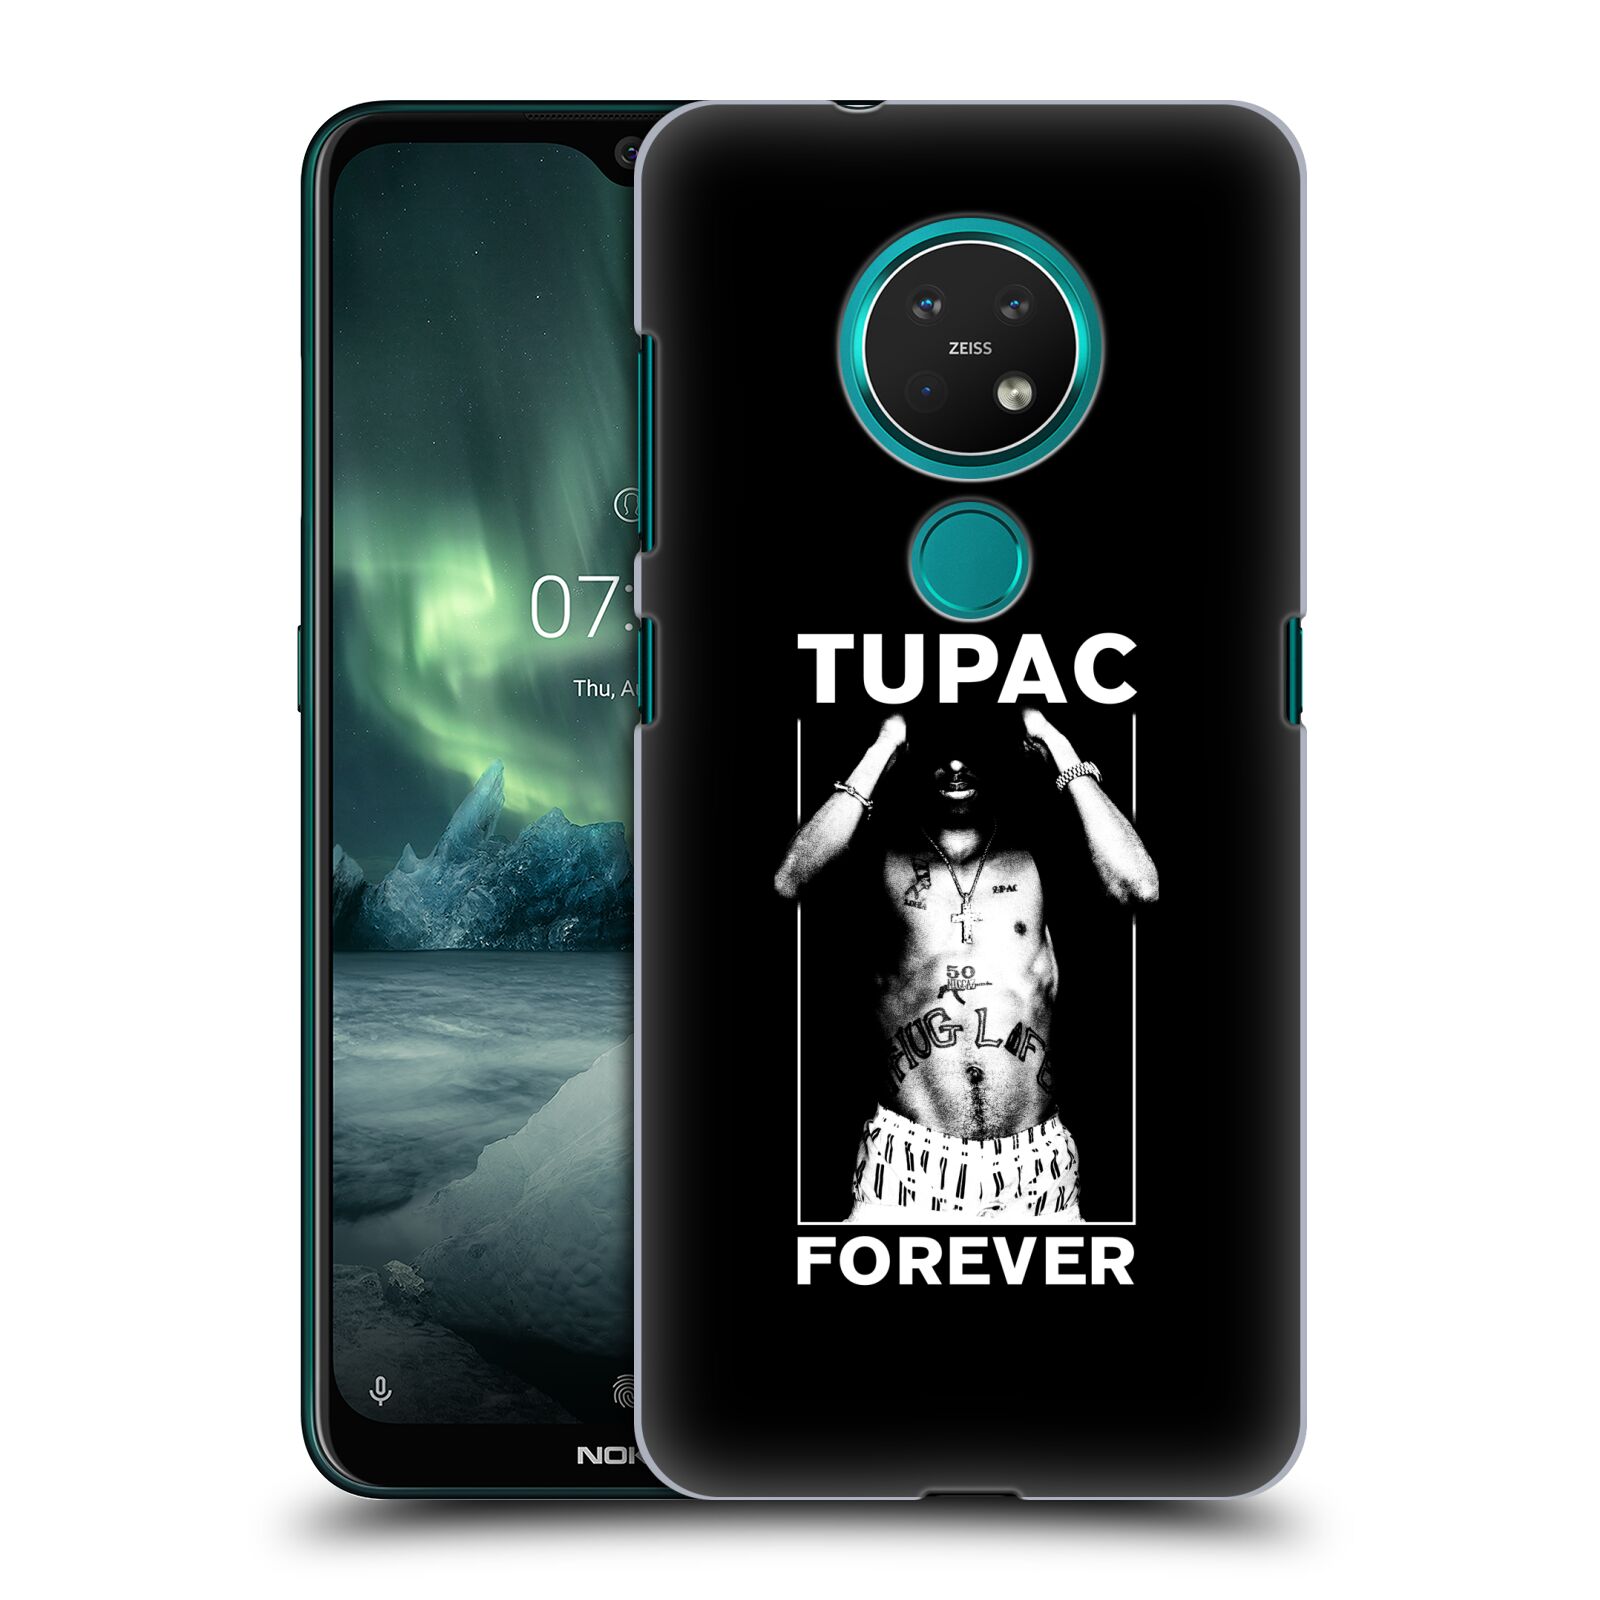 Pouzdro na mobil NOKIA 7.2 - HEAD CASE - Zpěvák rapper Tupac Shakur 2Pac bílý popisek FOREVER